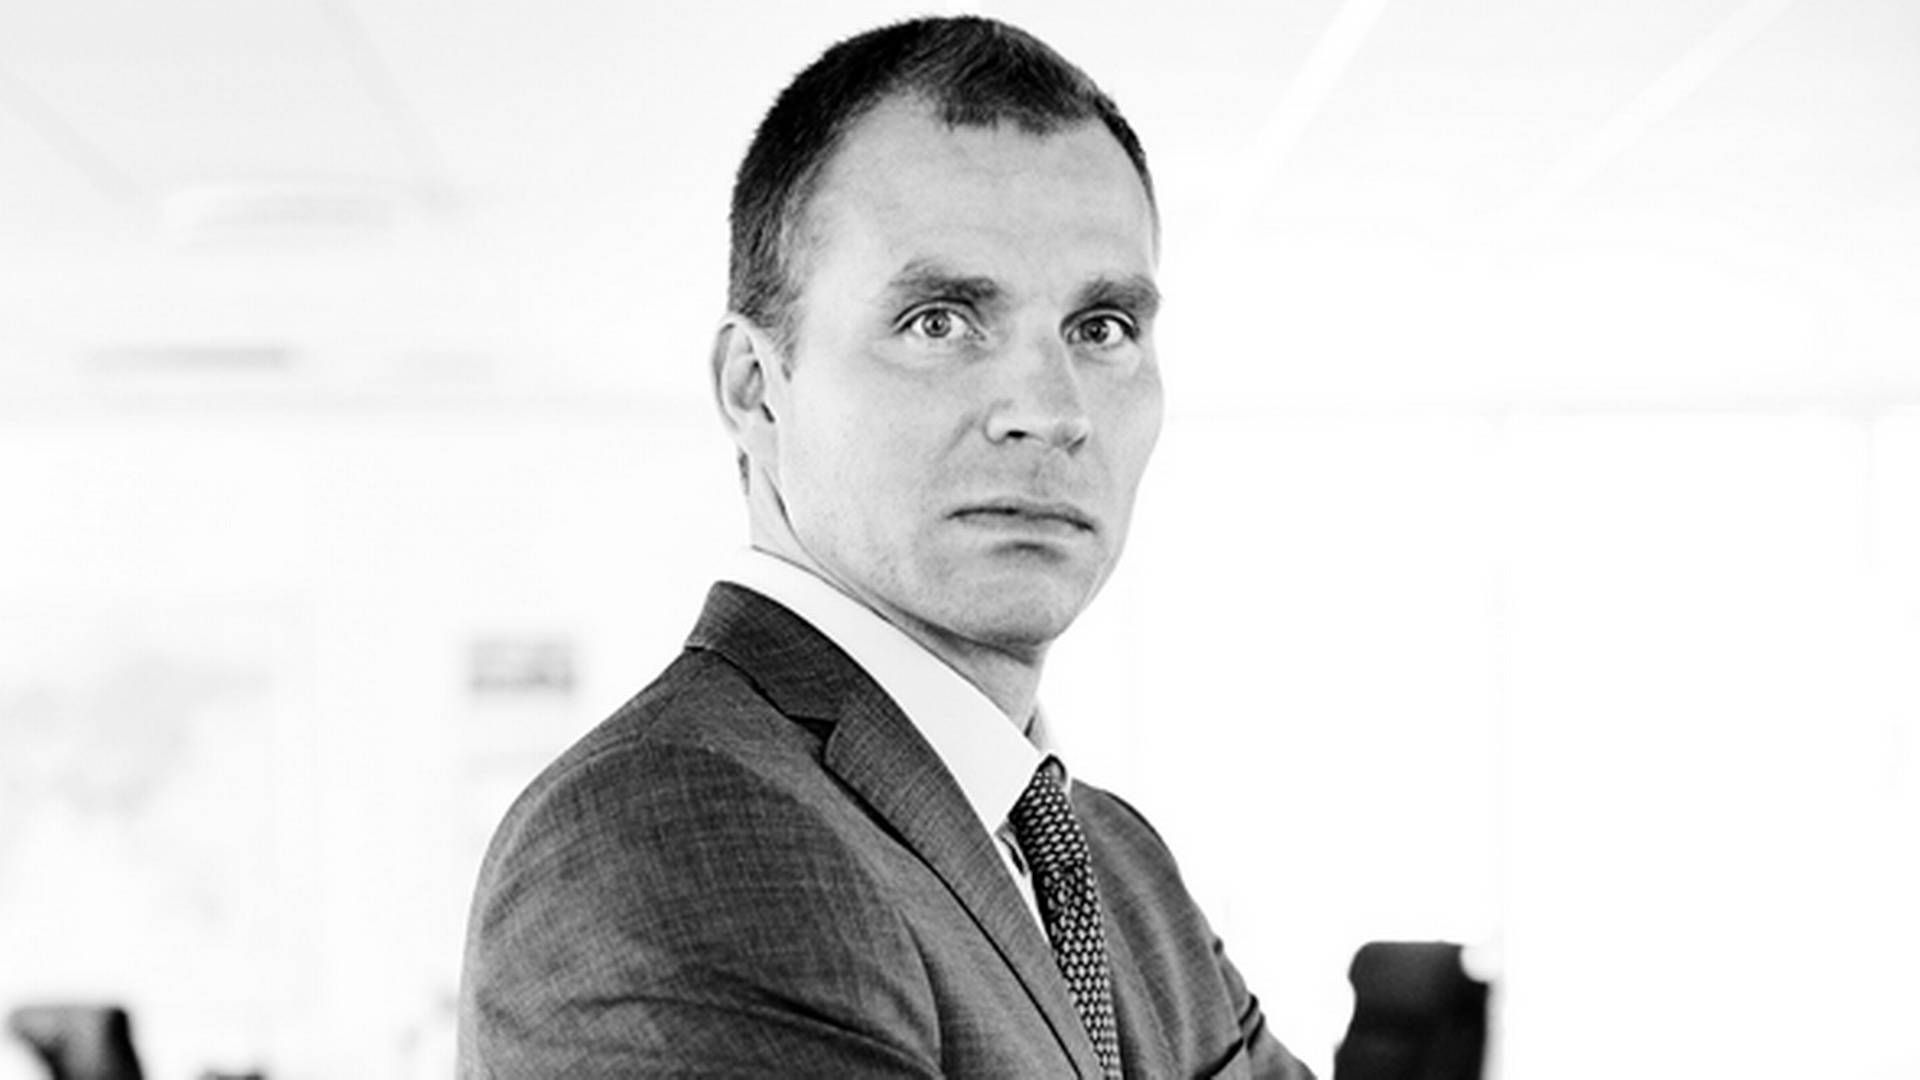 Frank Mortensen, CEO of Lightship Chartering